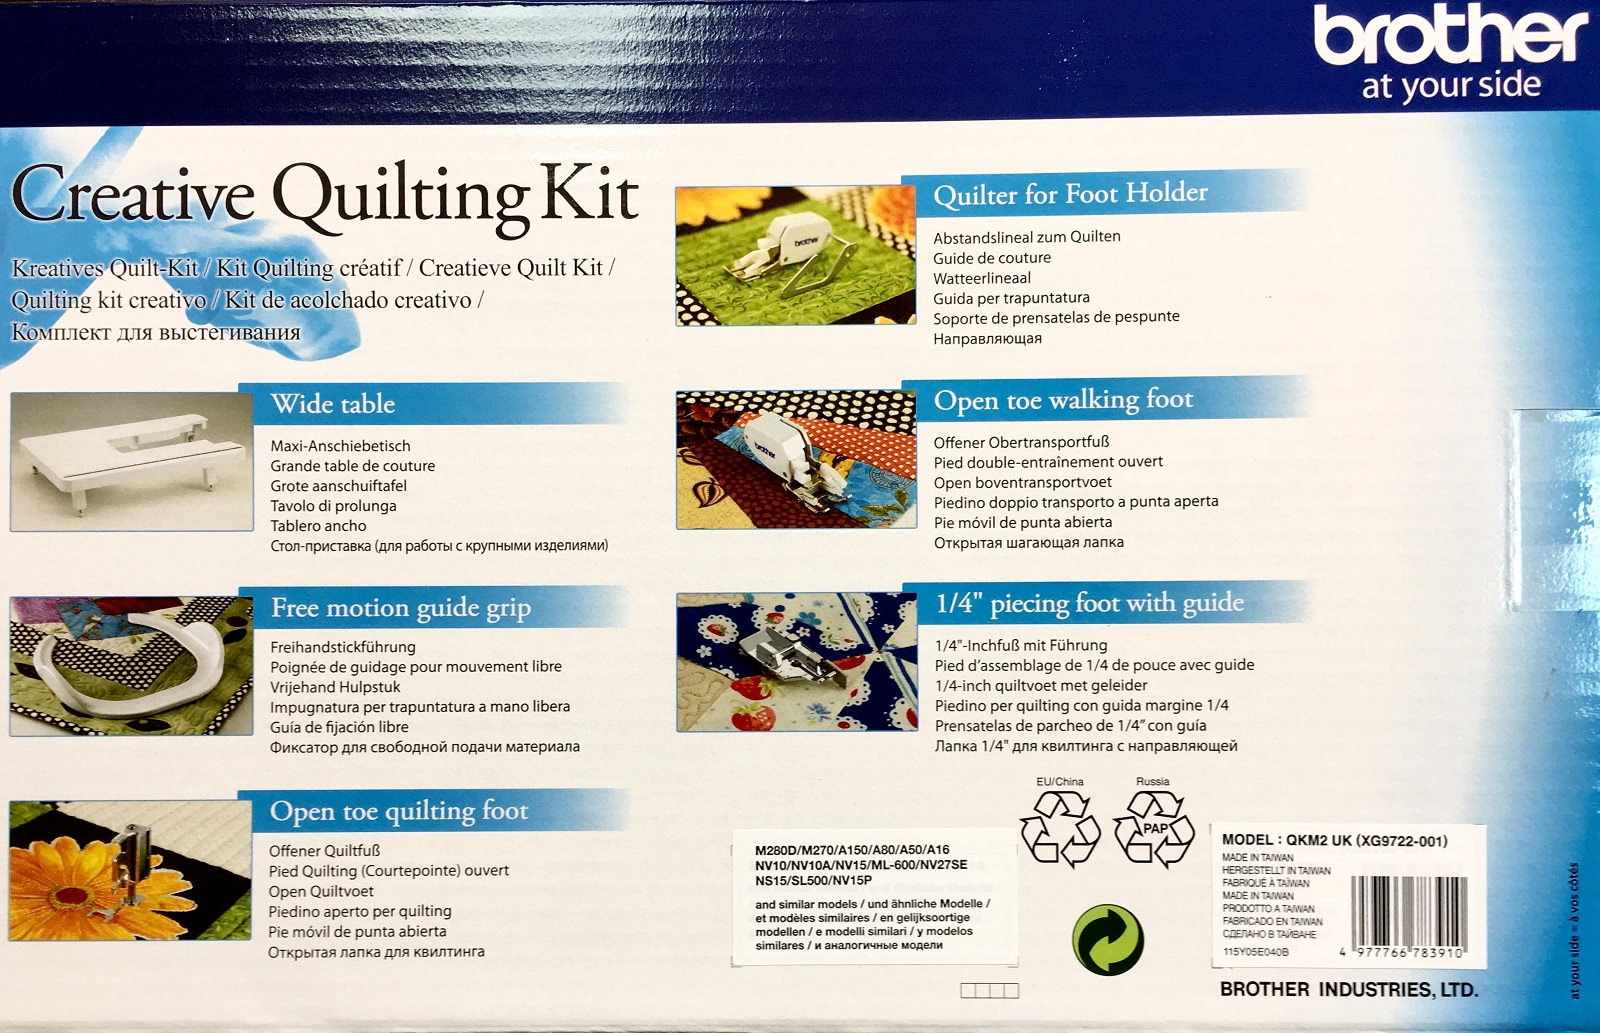 Creative Quilting Kit - QKM2UK